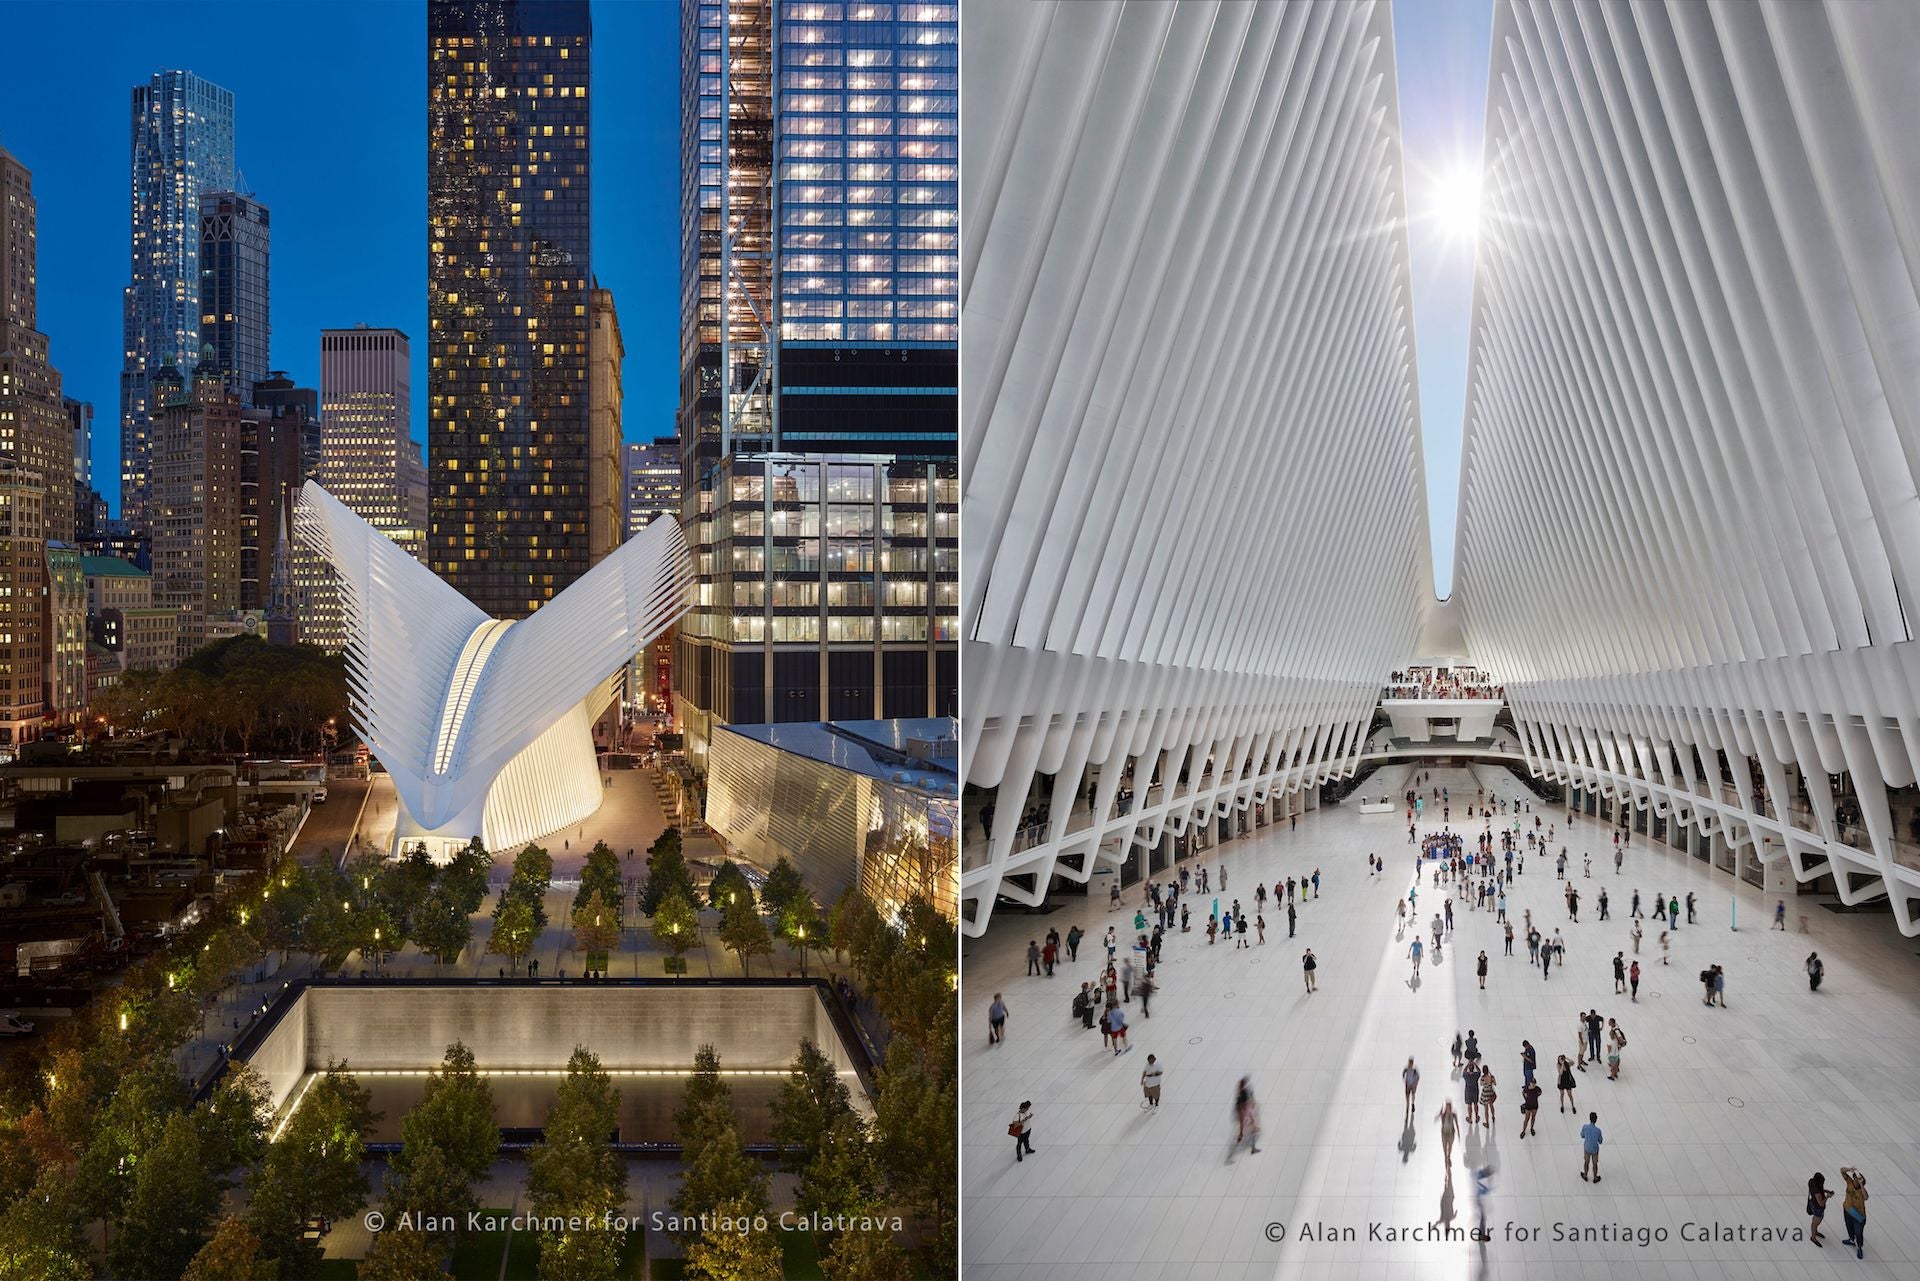 Calatrava's Oculus Transportation Hub at the World Trade Center in New York City. Photos © Alan Karchmer / Otto